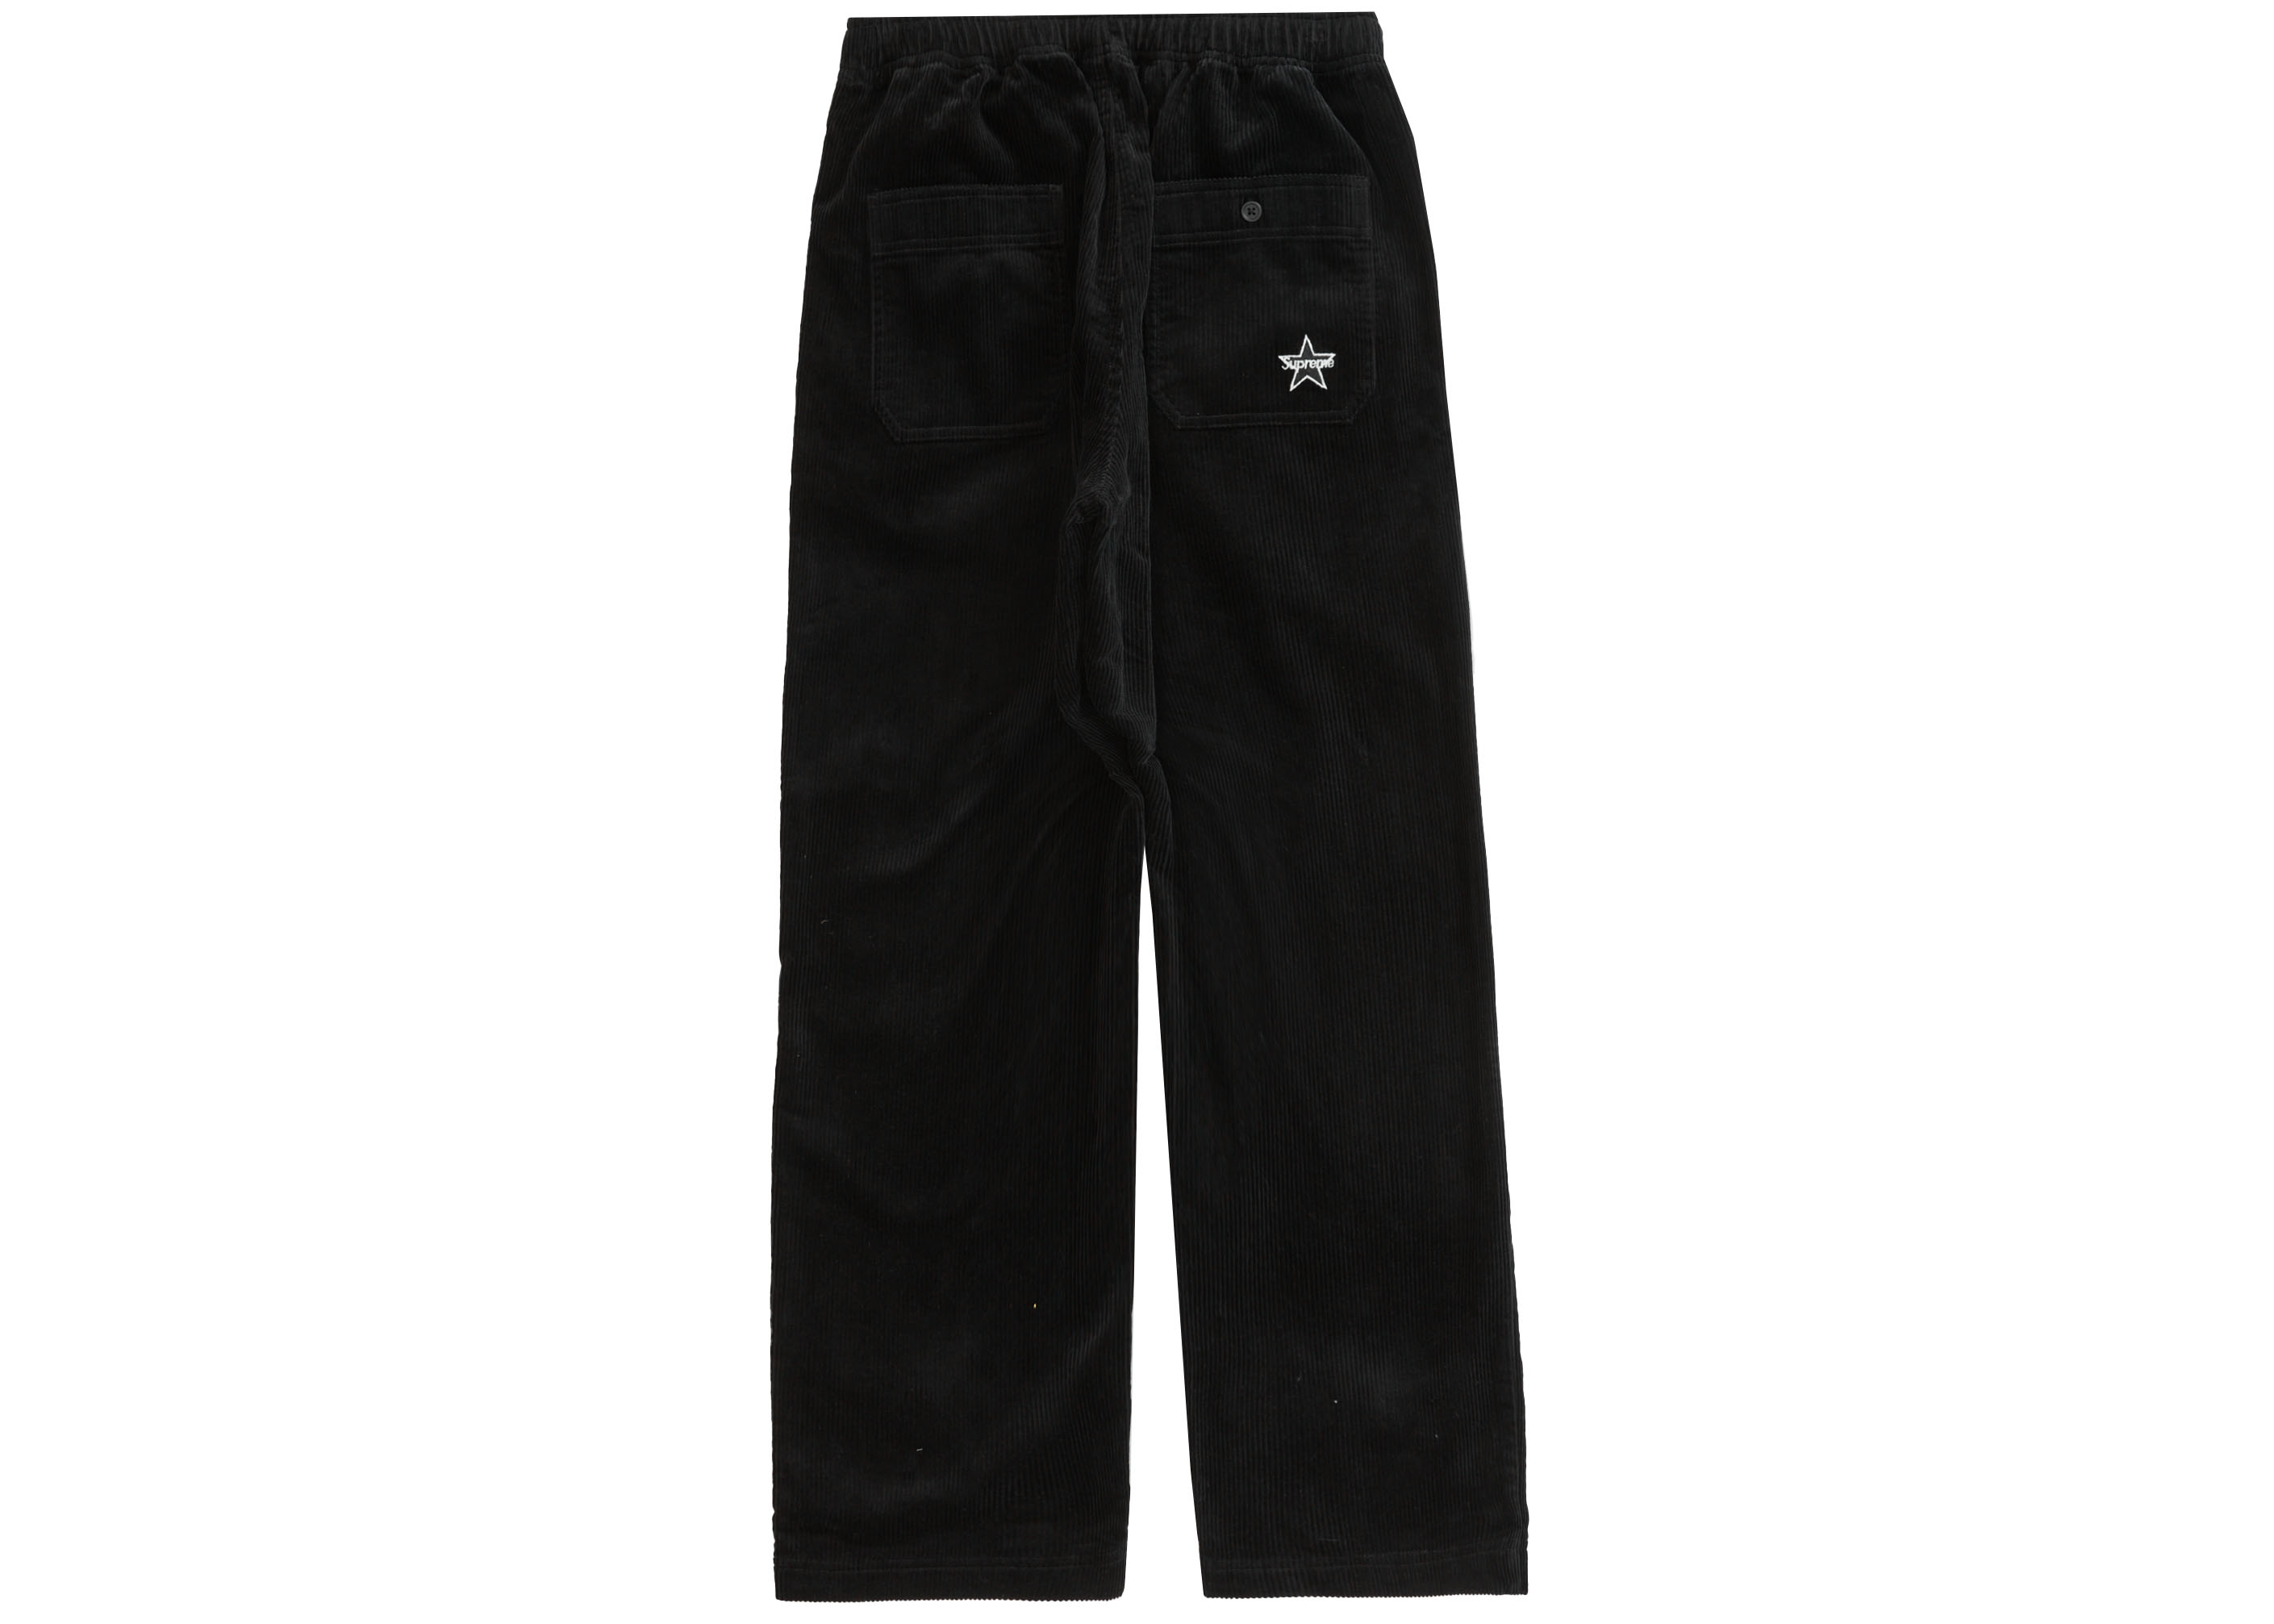 Supreme Corduroy Skate Pant (FW23) Black